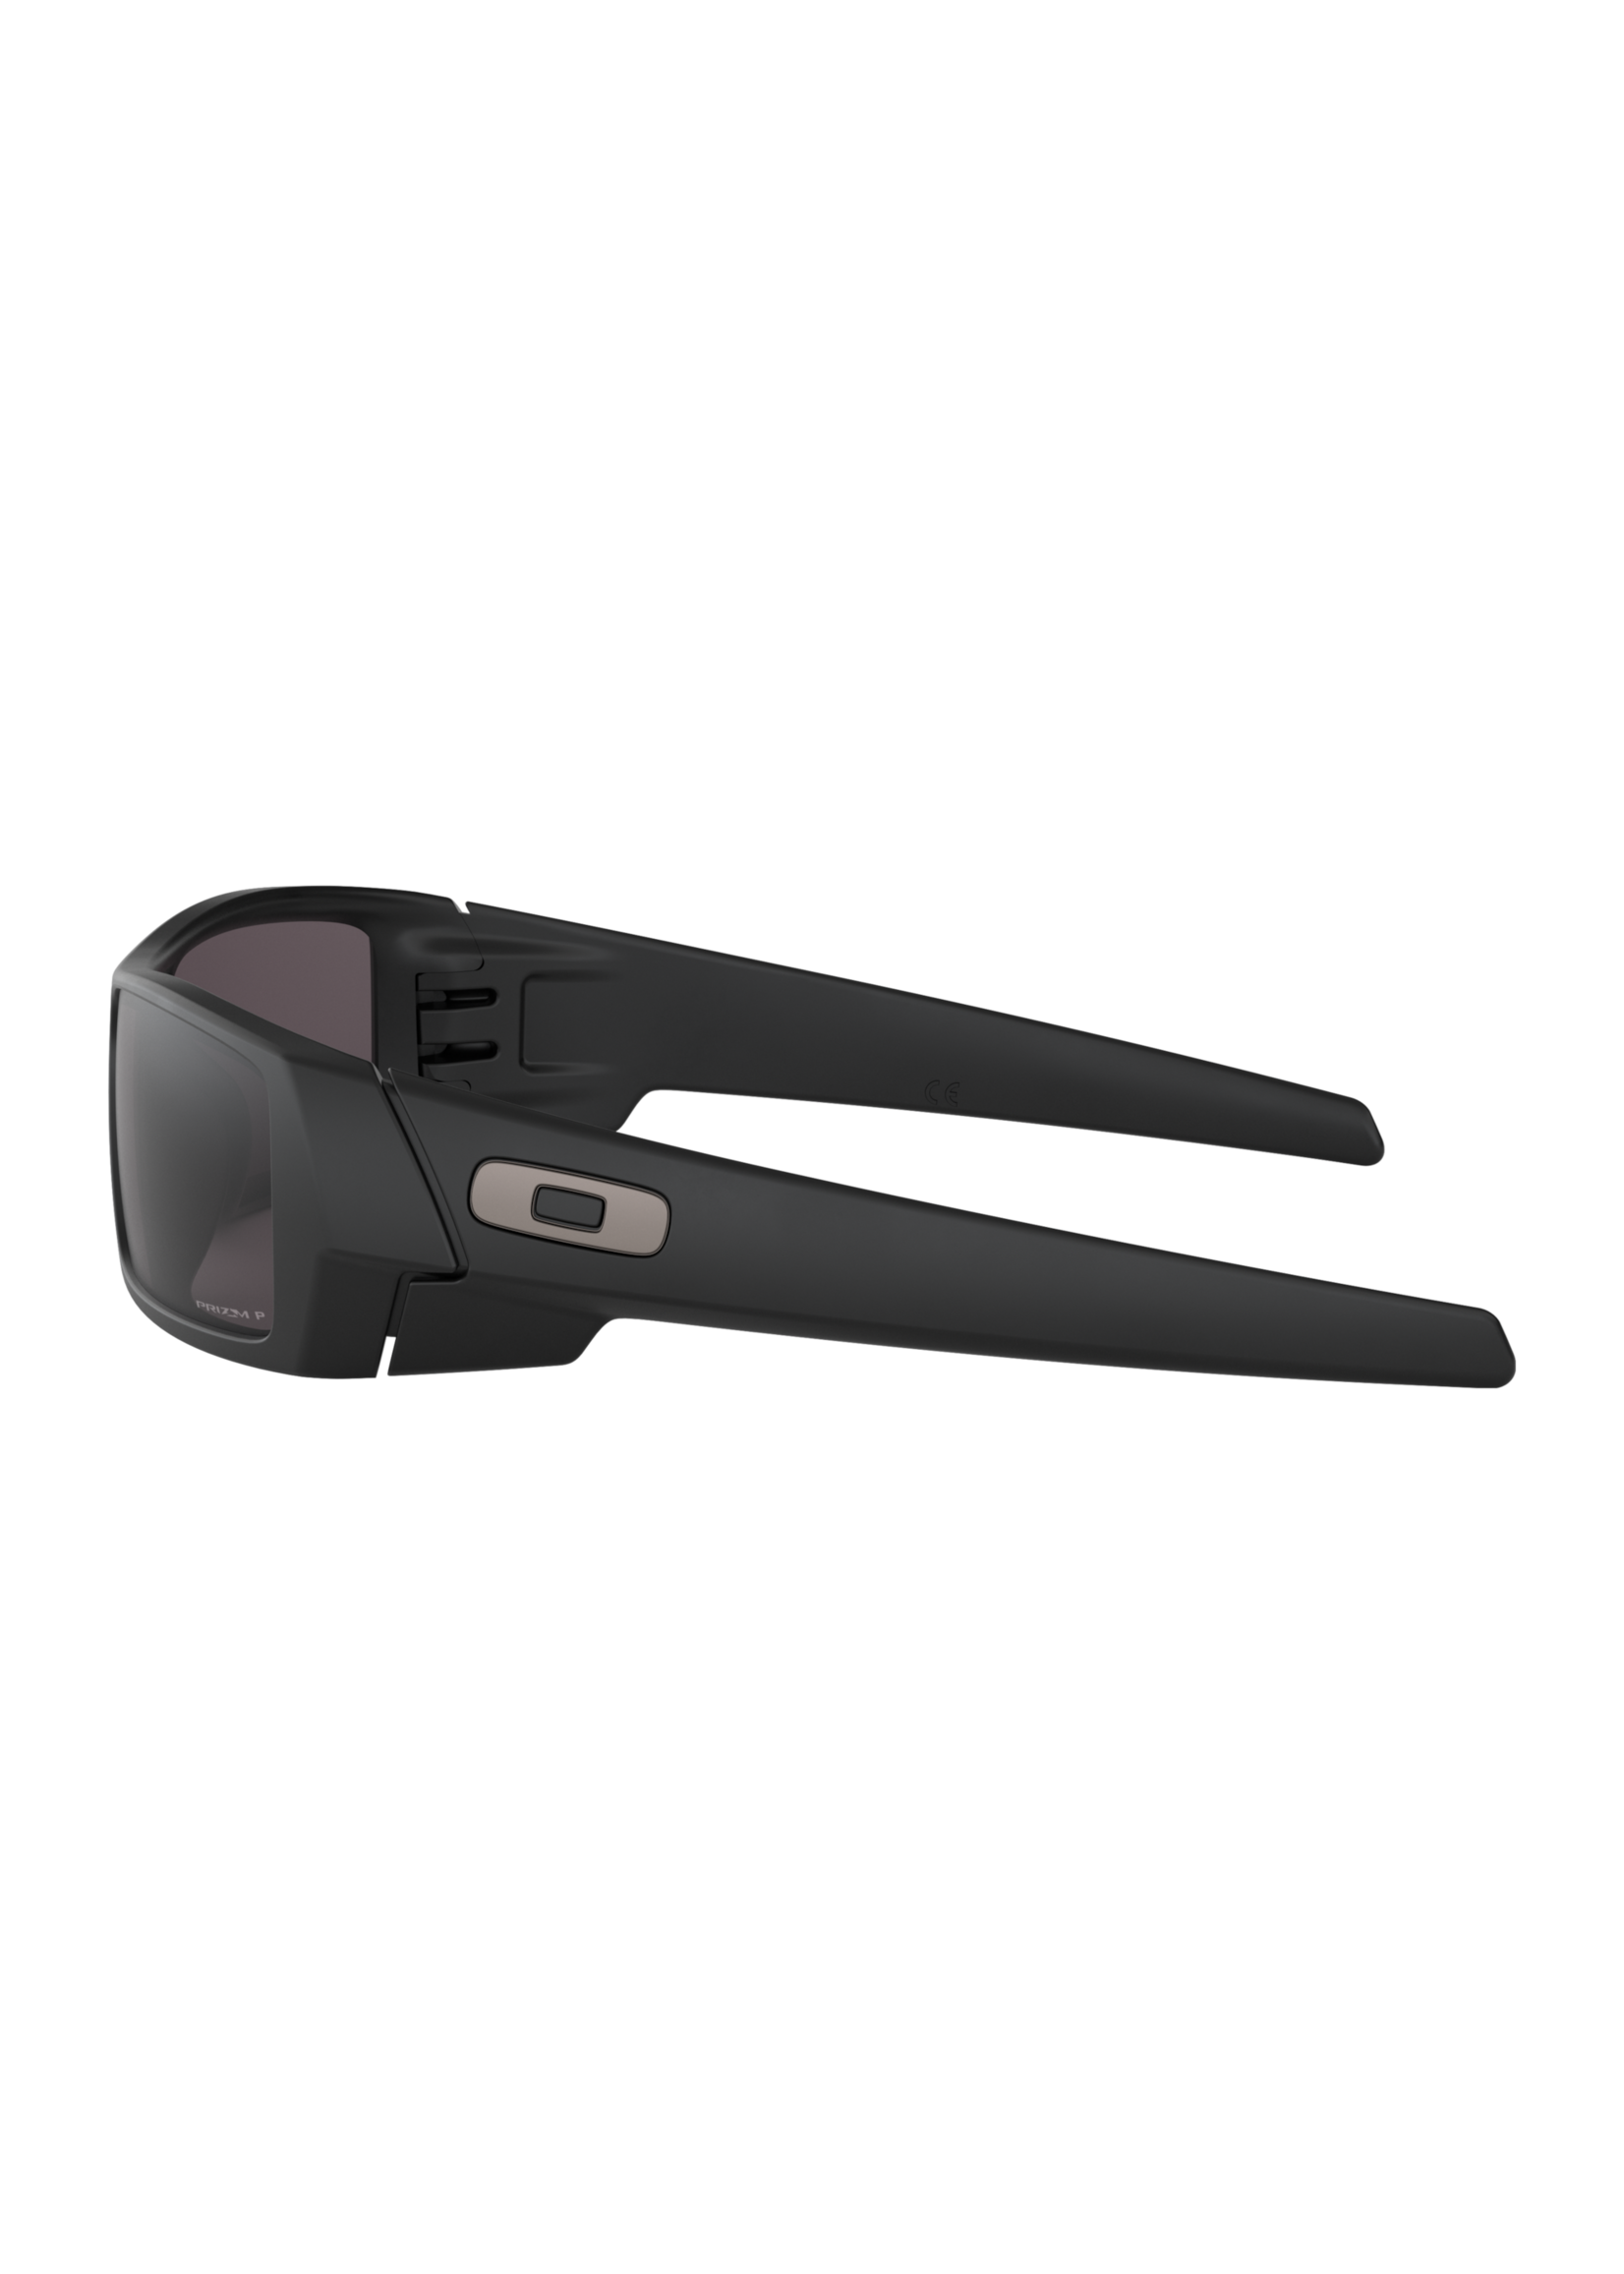 Gascan® Matte Black Sunglasses w/ Prizm Grey Polarized Lens - Medicine  Hat-The Boarding House